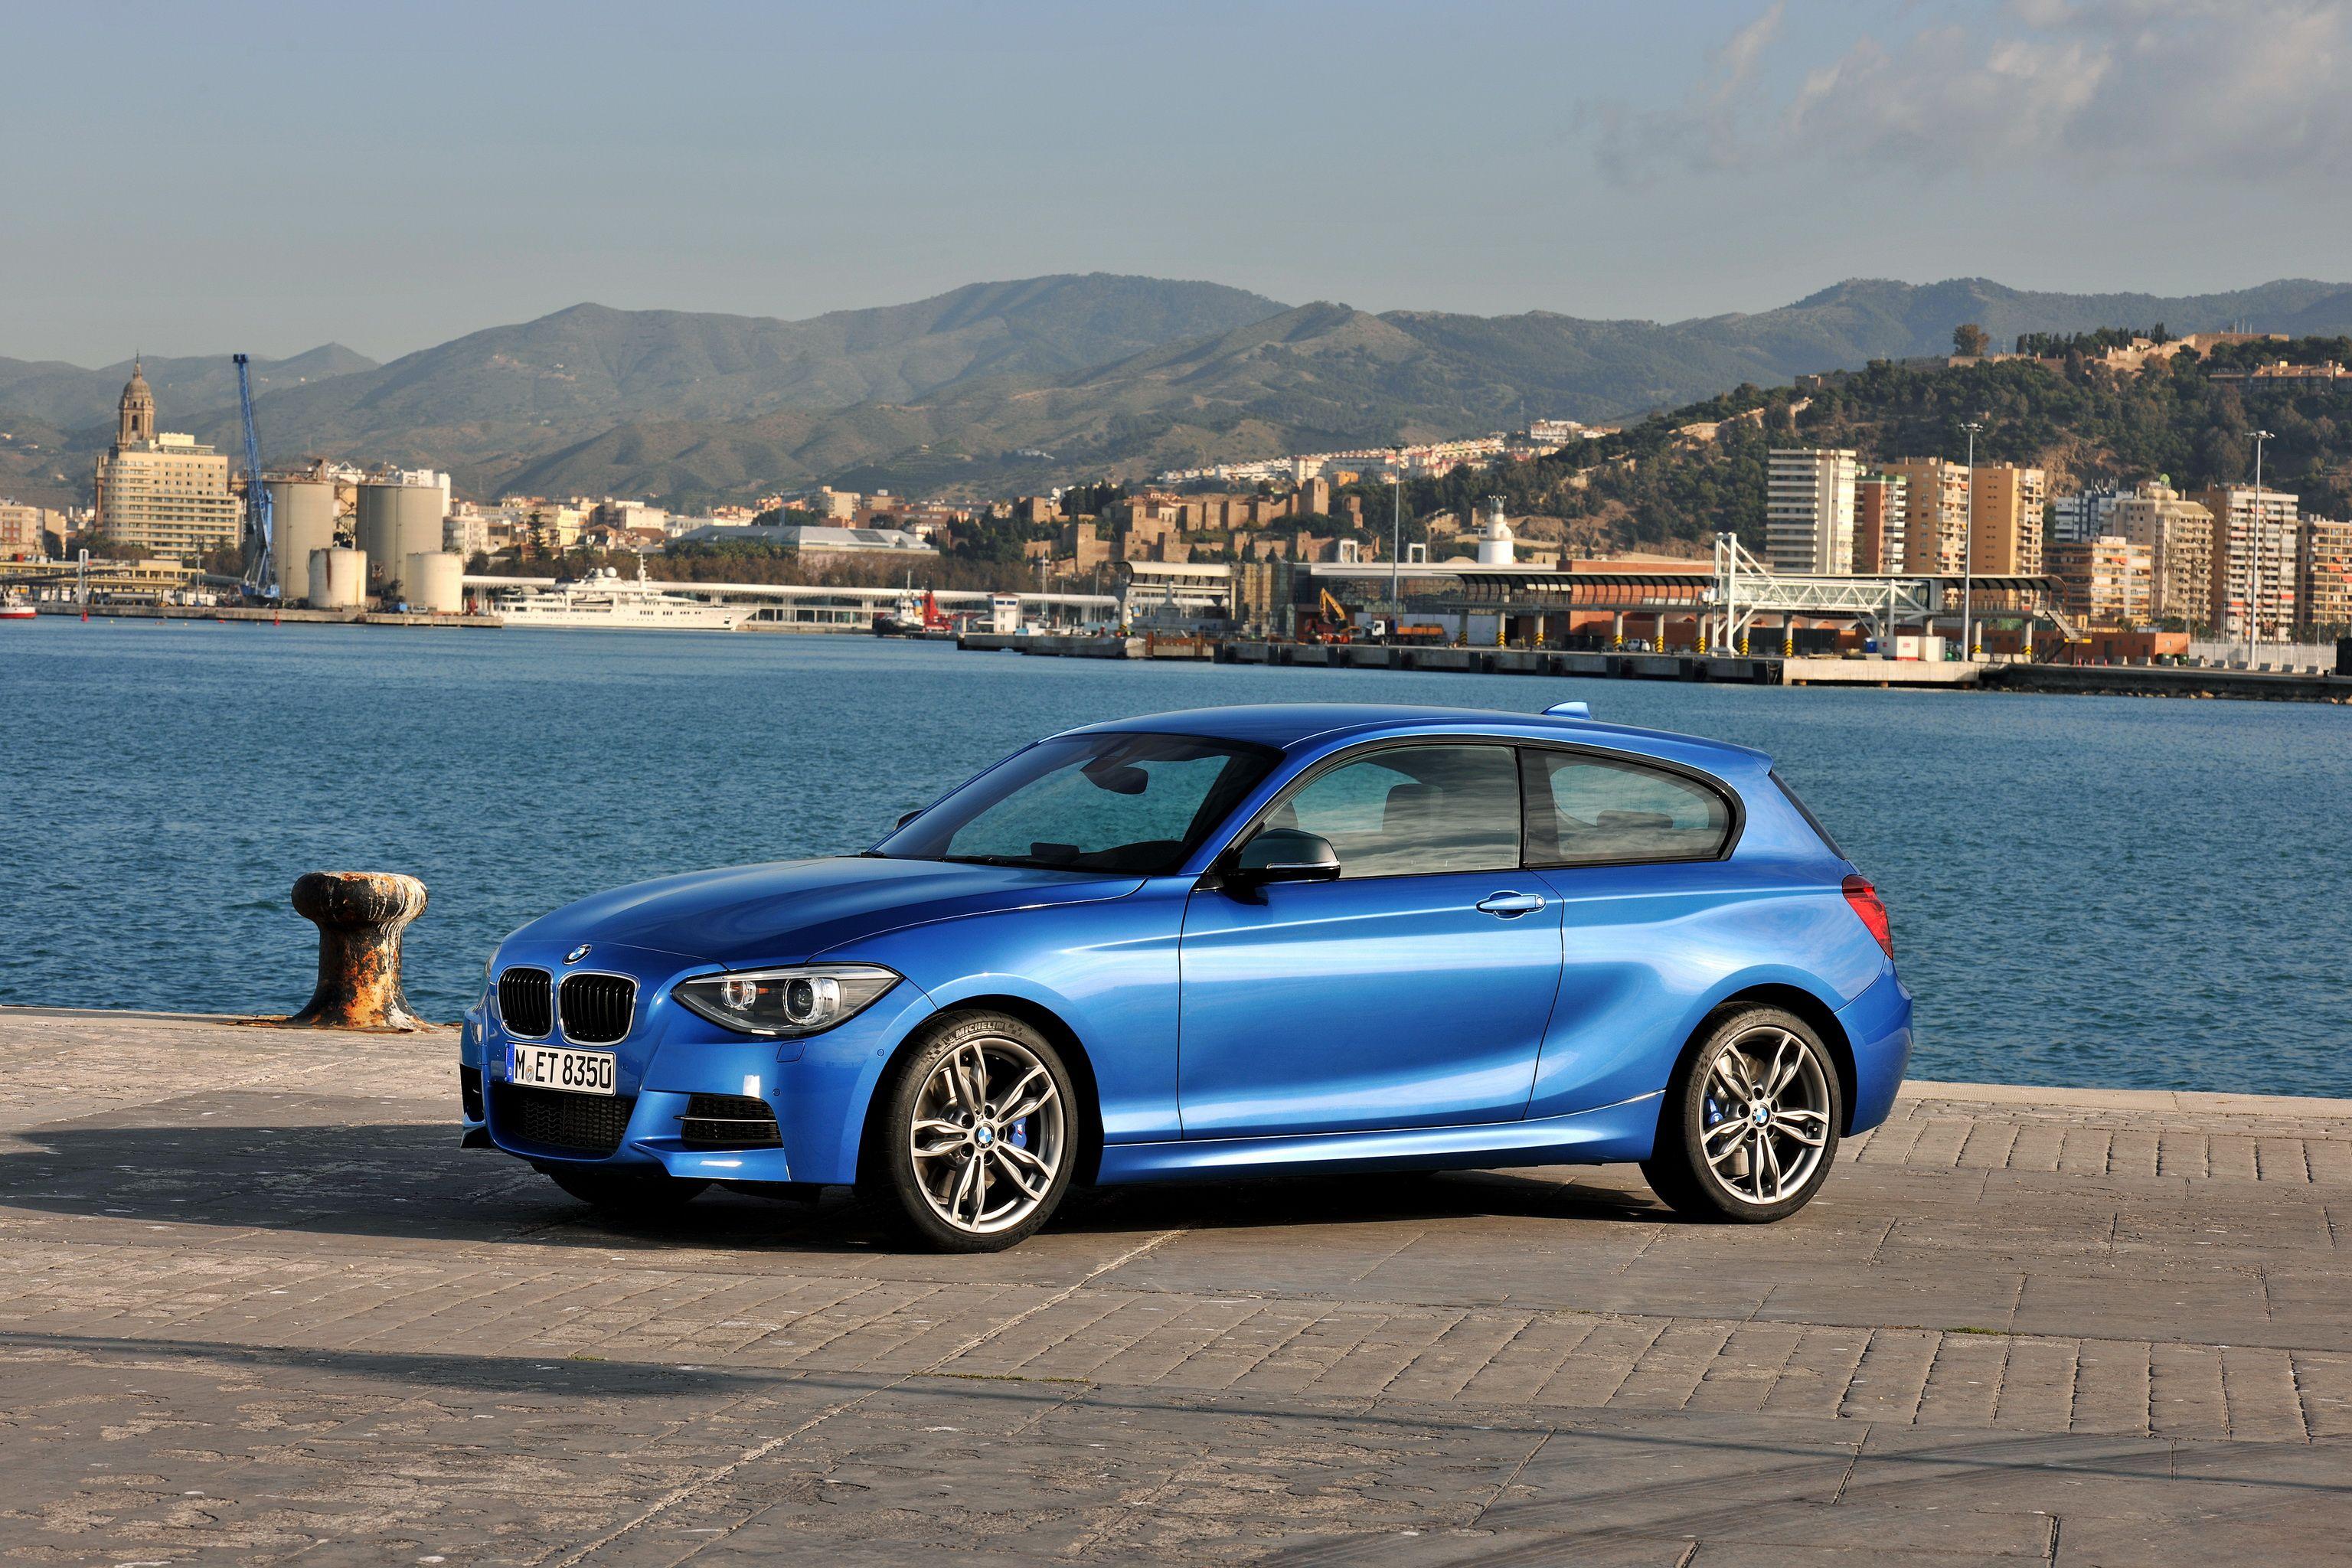 image BMW 2012 M135i ( F21 ) Blue Cars Side 3072x2048